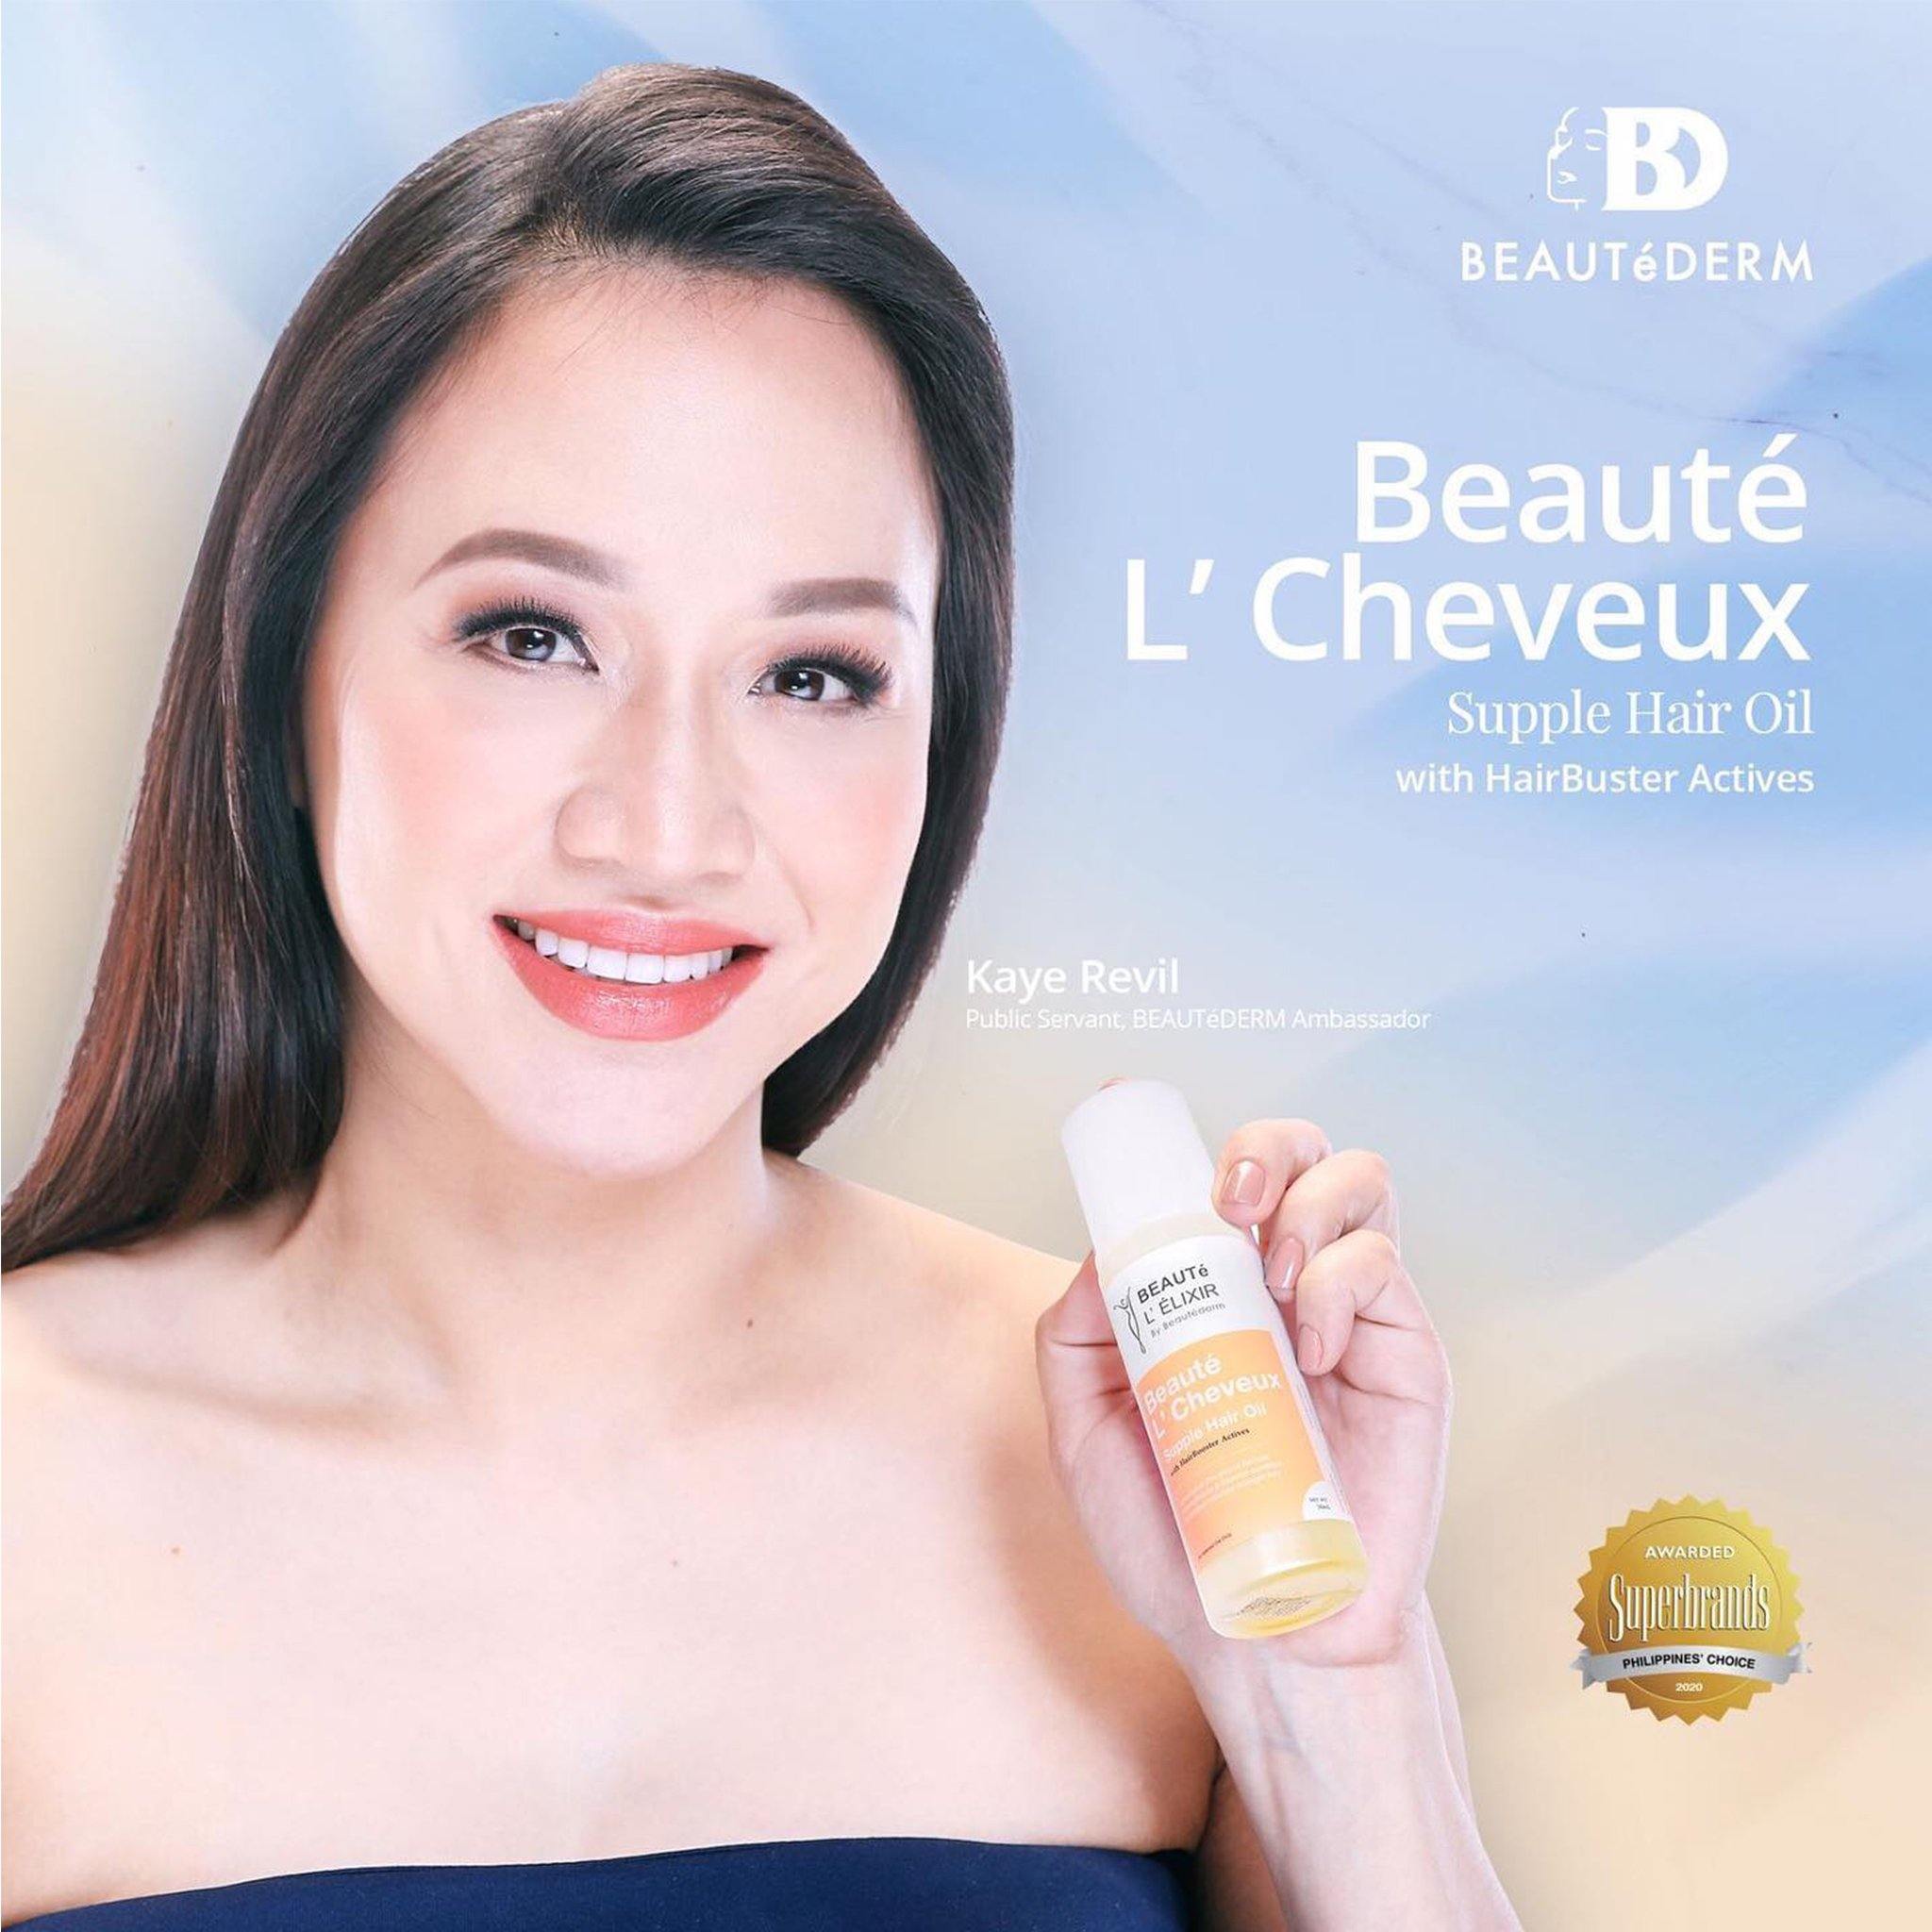 Beaute L' Cheveux Supple Hair Oil with Hair Booster Actives, 50ml, Beaute L' Elixir by Beautederm, with Kaye Revil (Beautederm Ambassador)